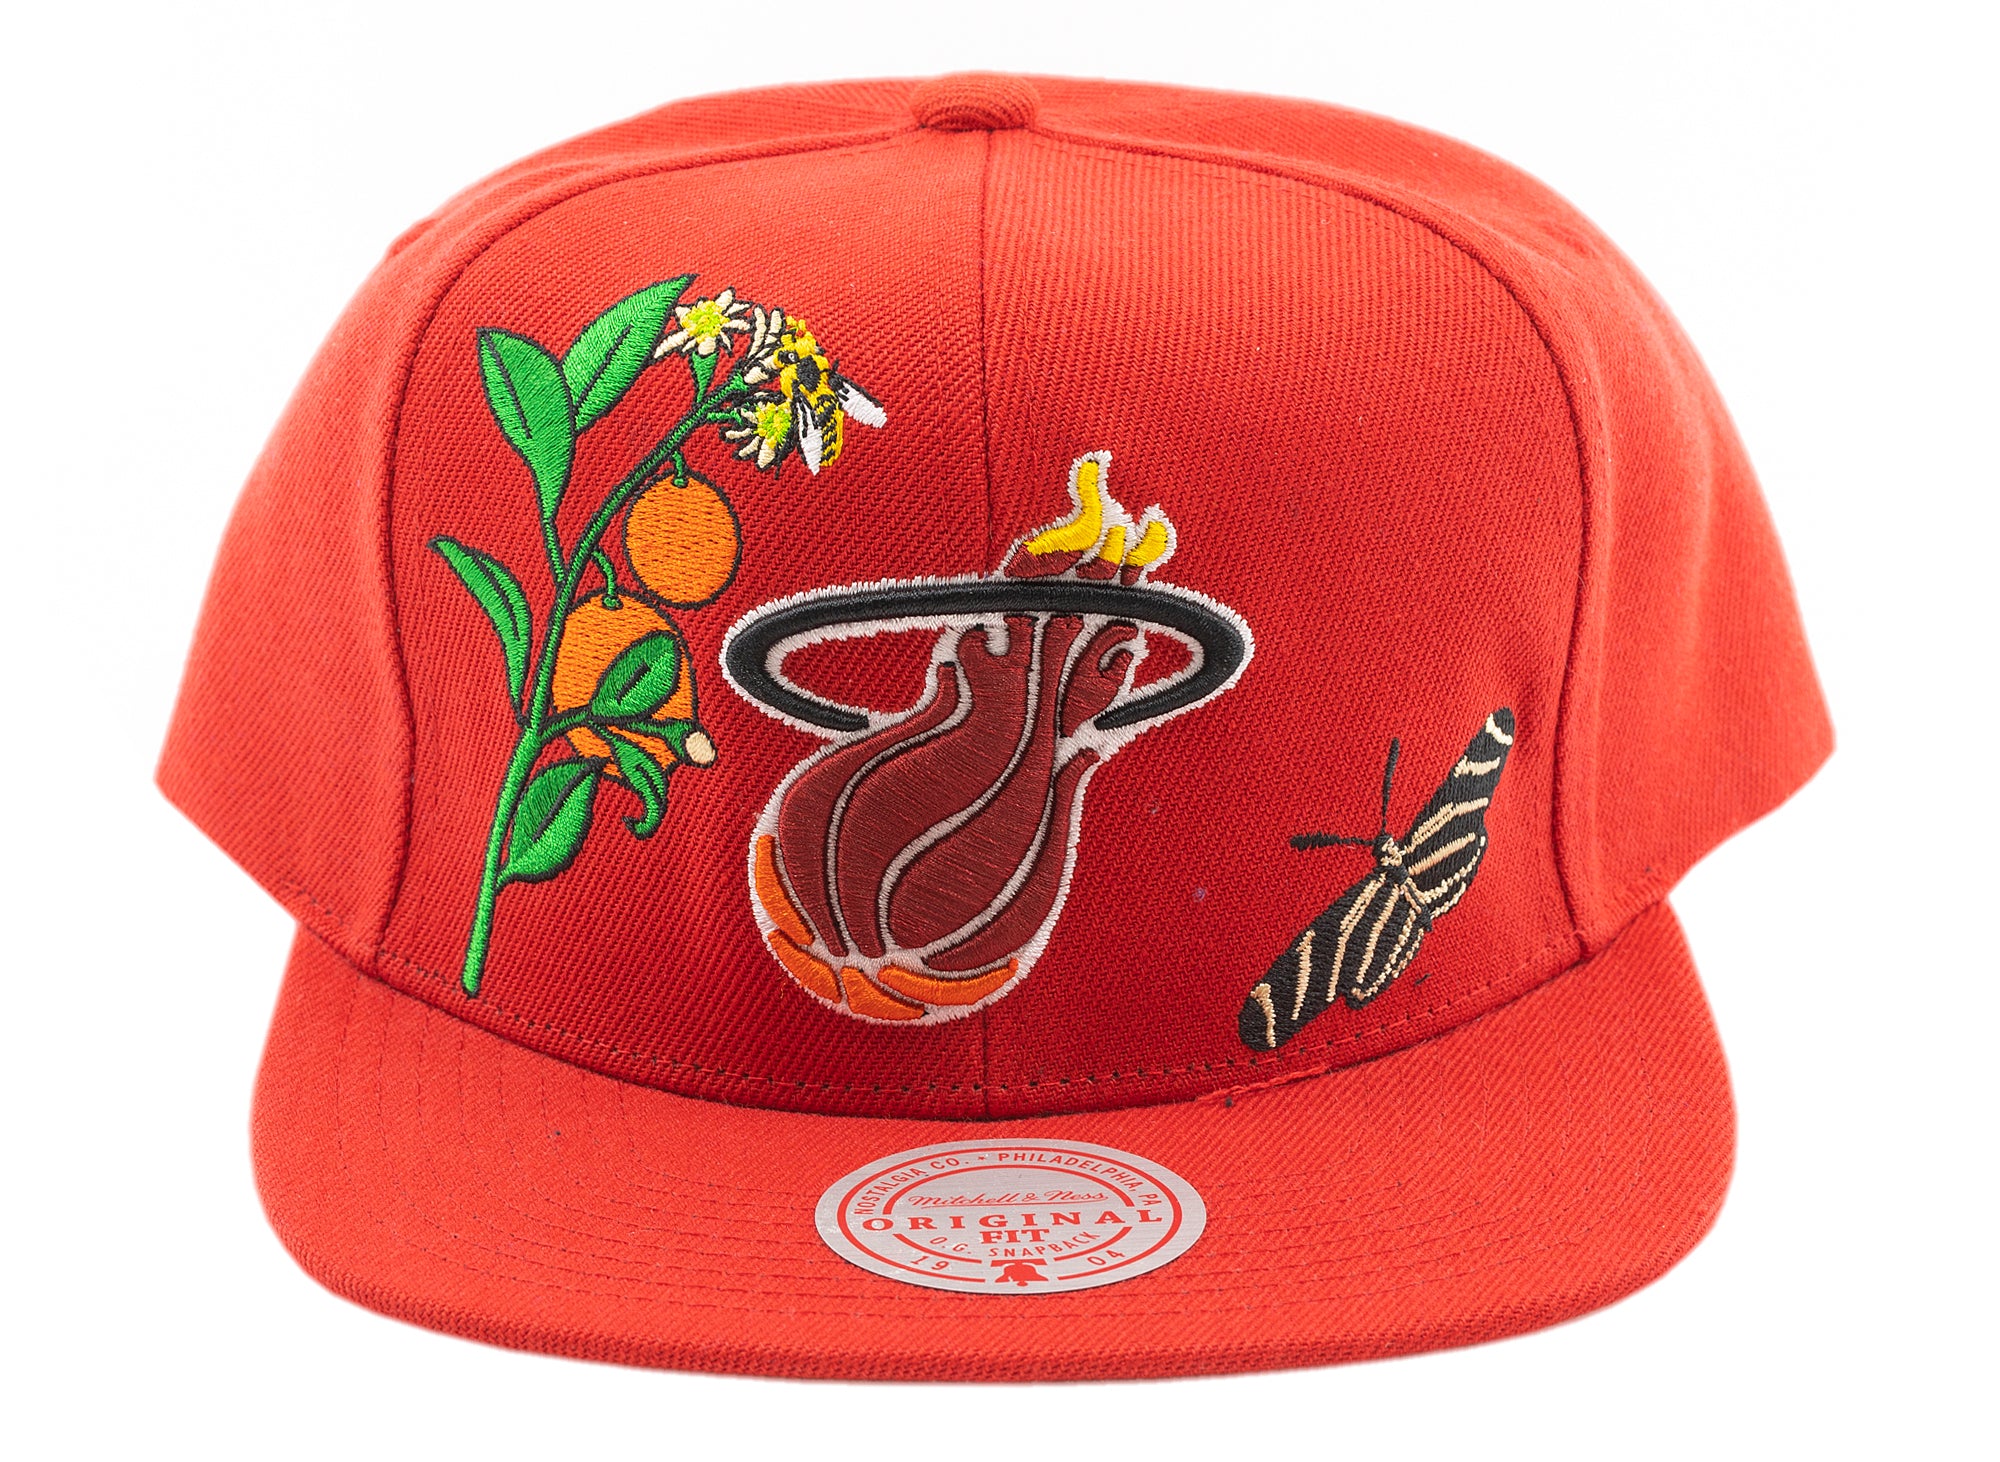 Unk Miami Heat Black/Yellow/Red NBA Basketball Team Cap Hat Size 7 1/2  [RARE]